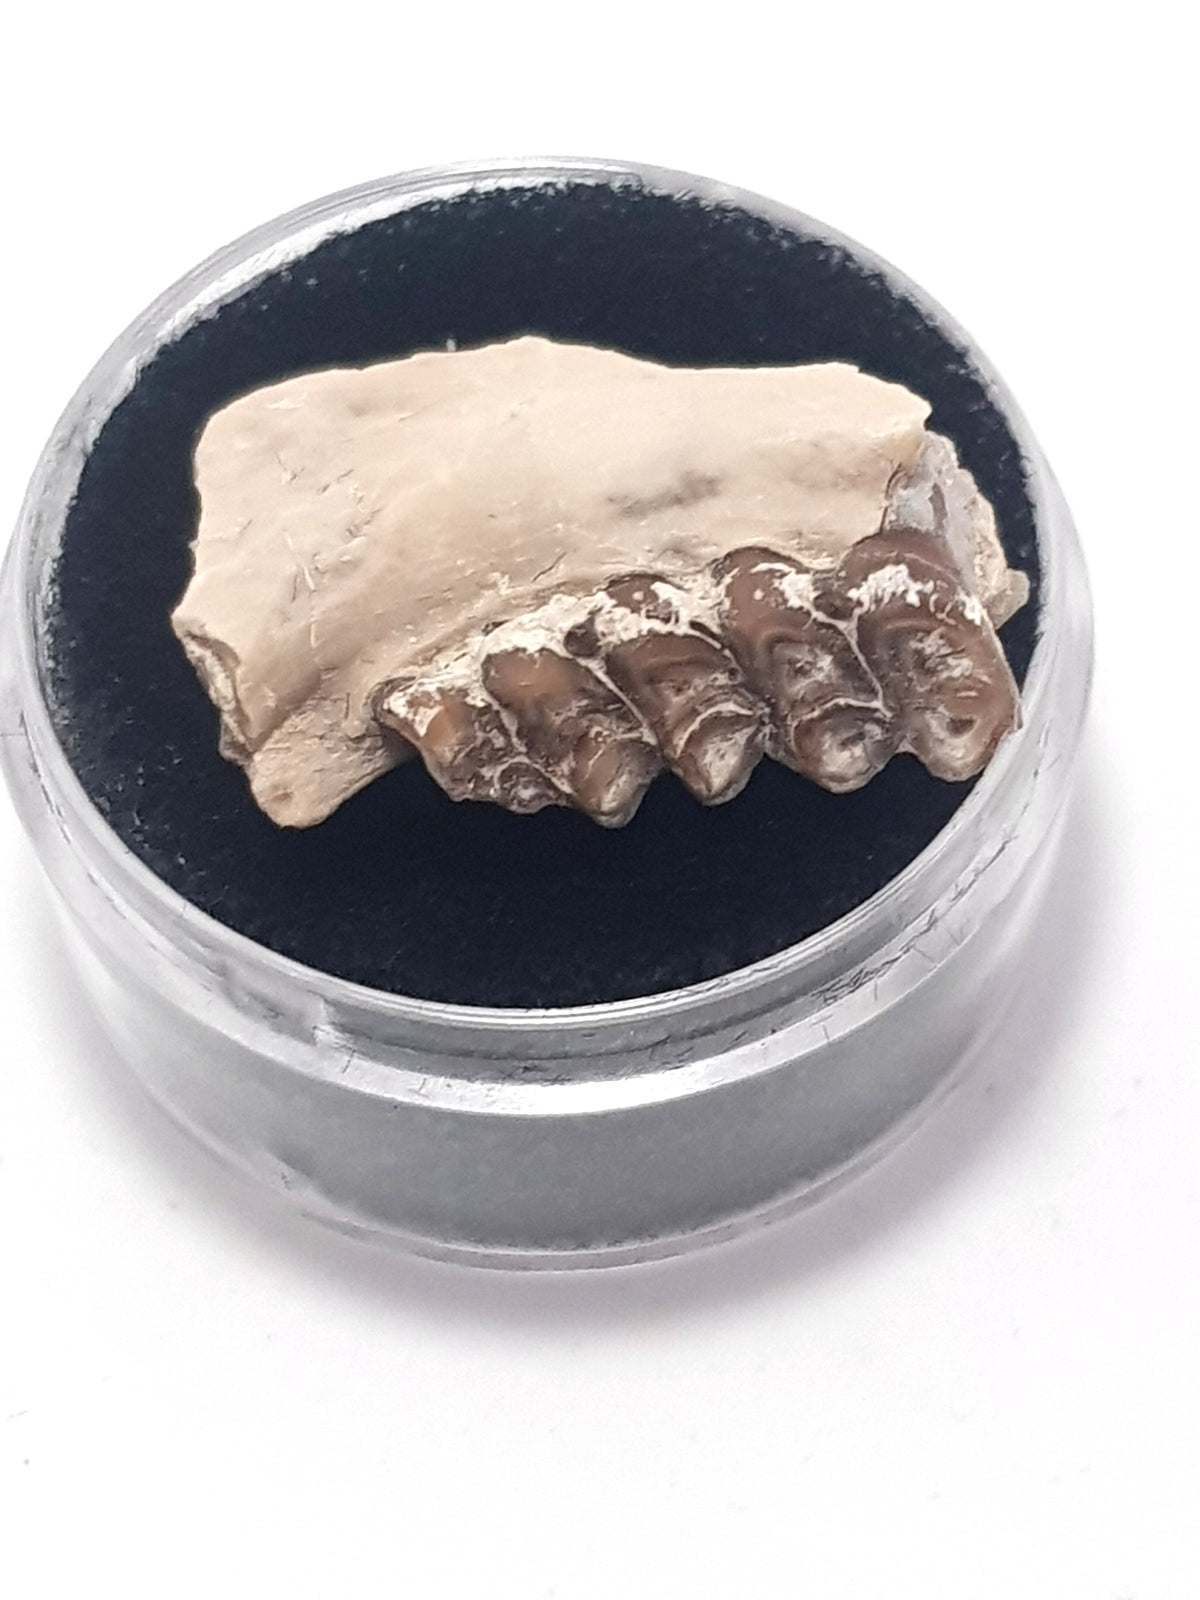 section leptomeryx jaw with teeth